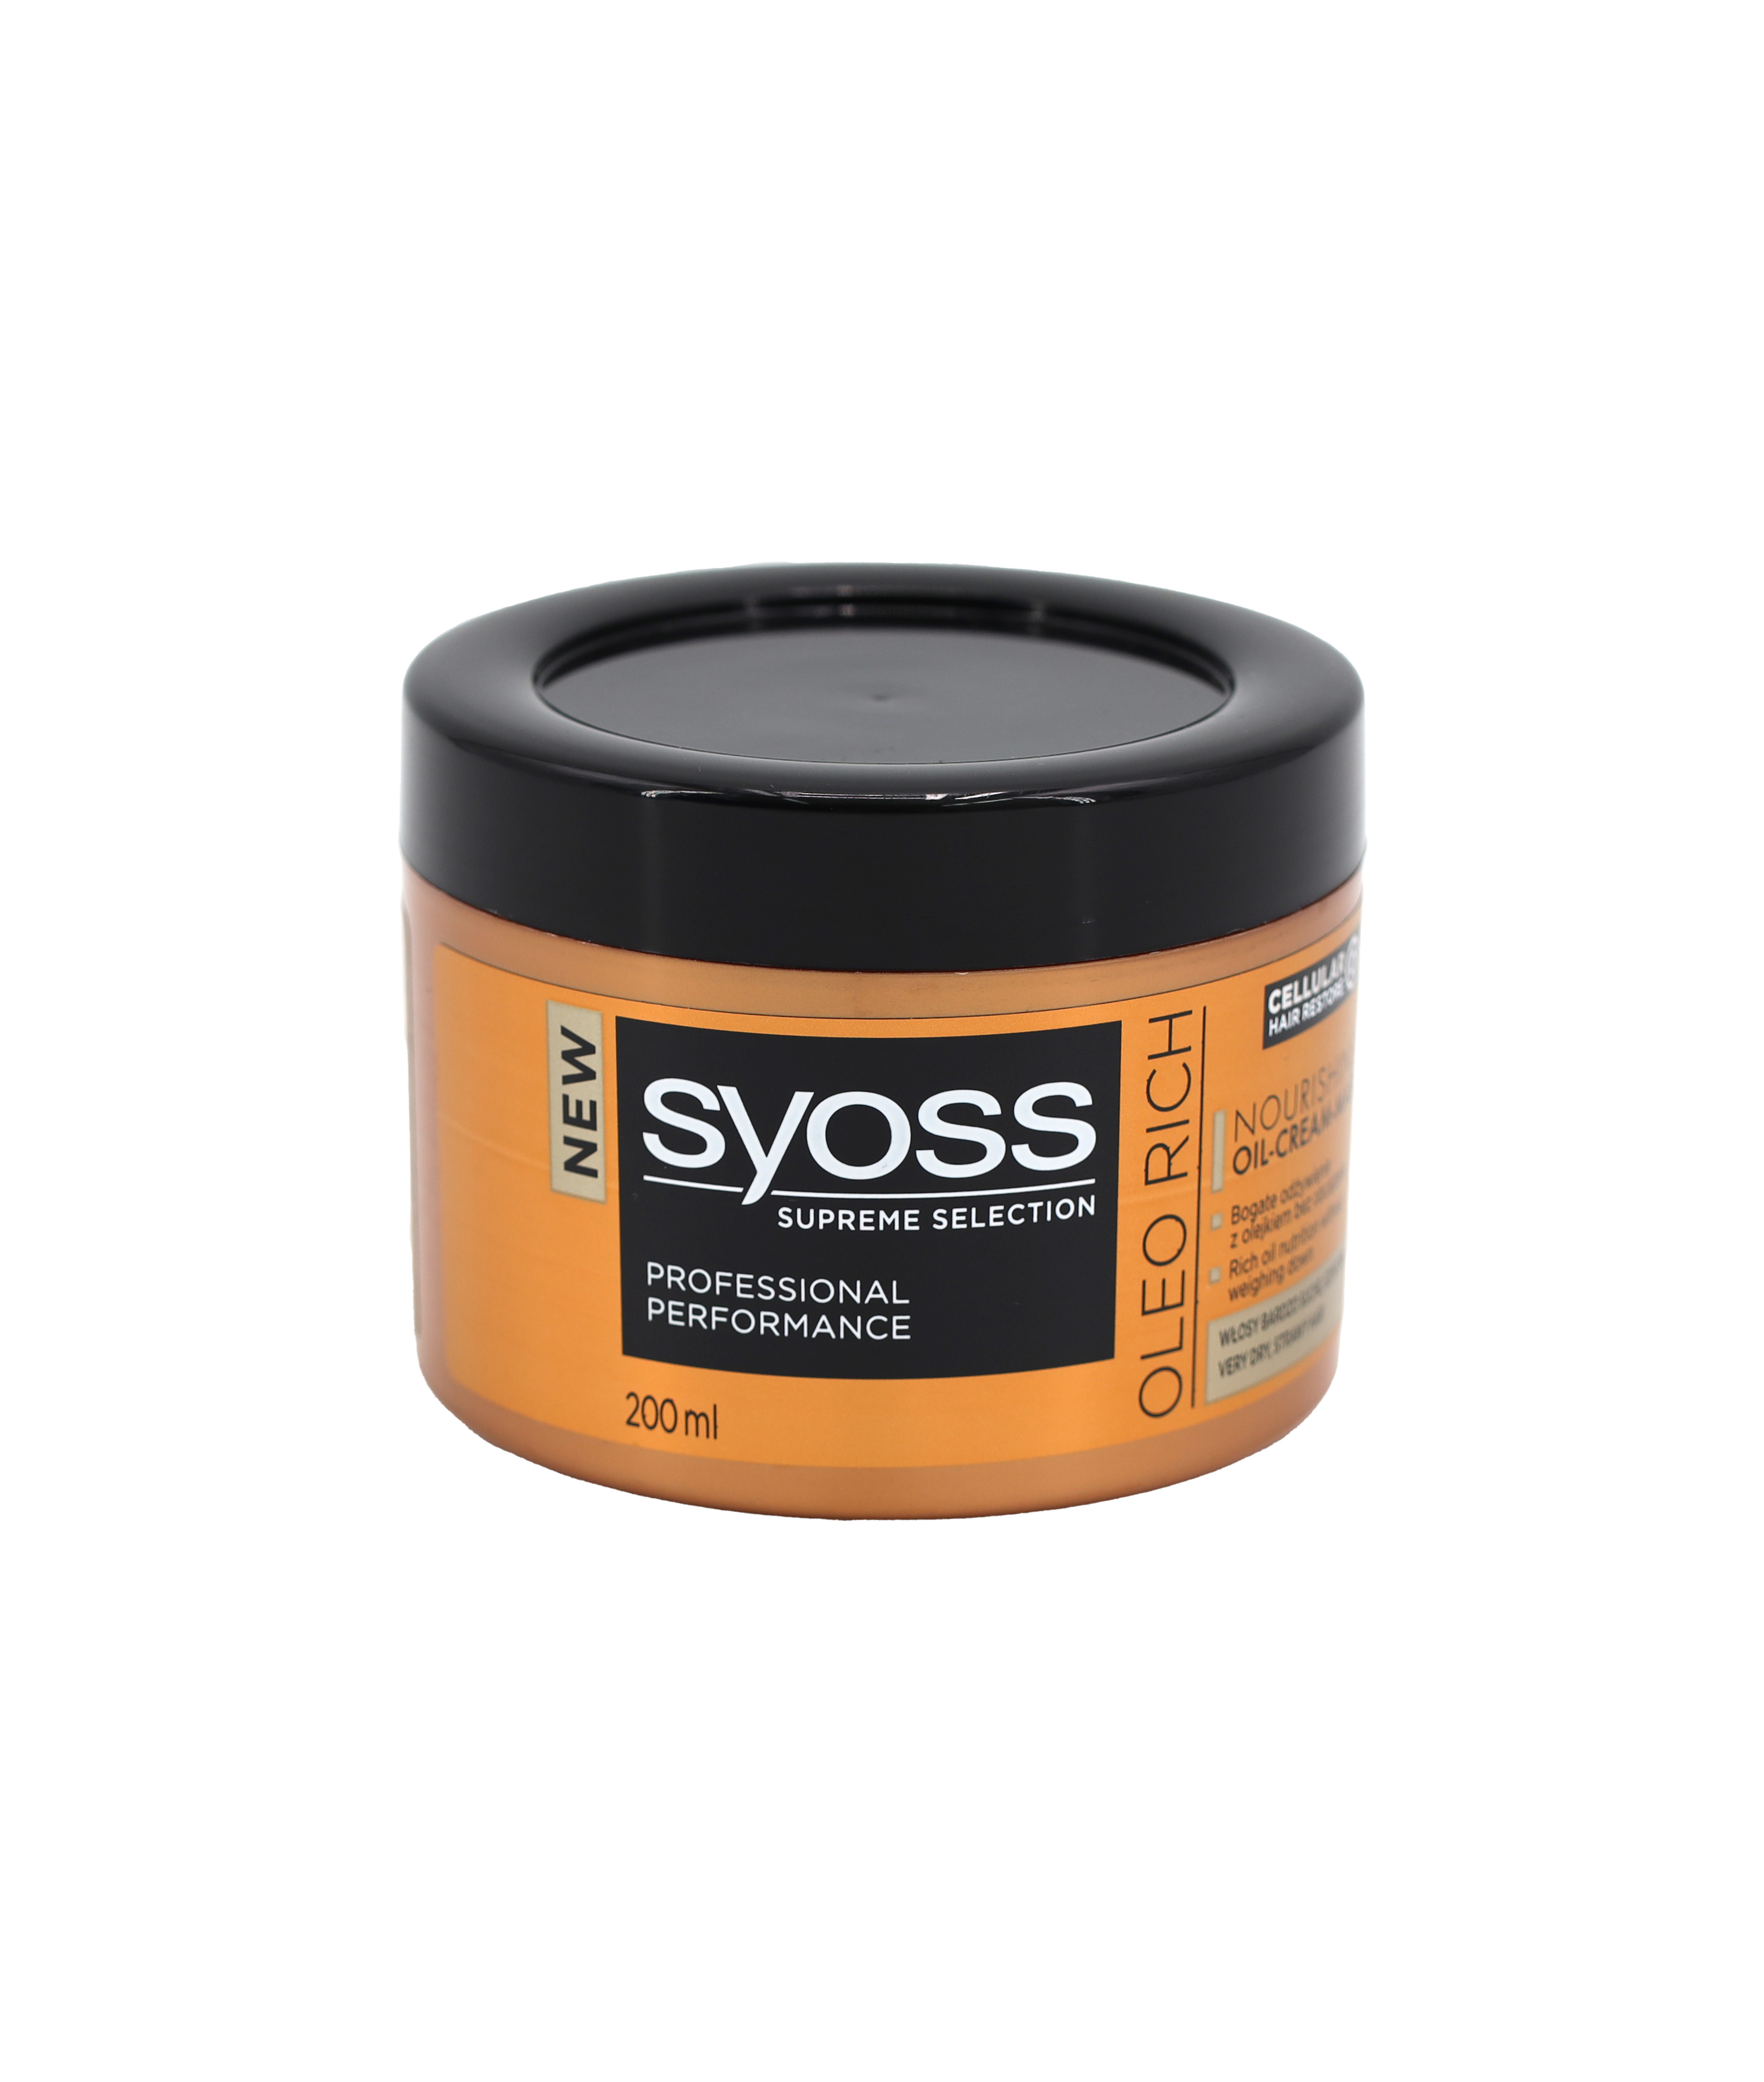 Syoss Oil-Cream-Mask Oleo Rich 200ml